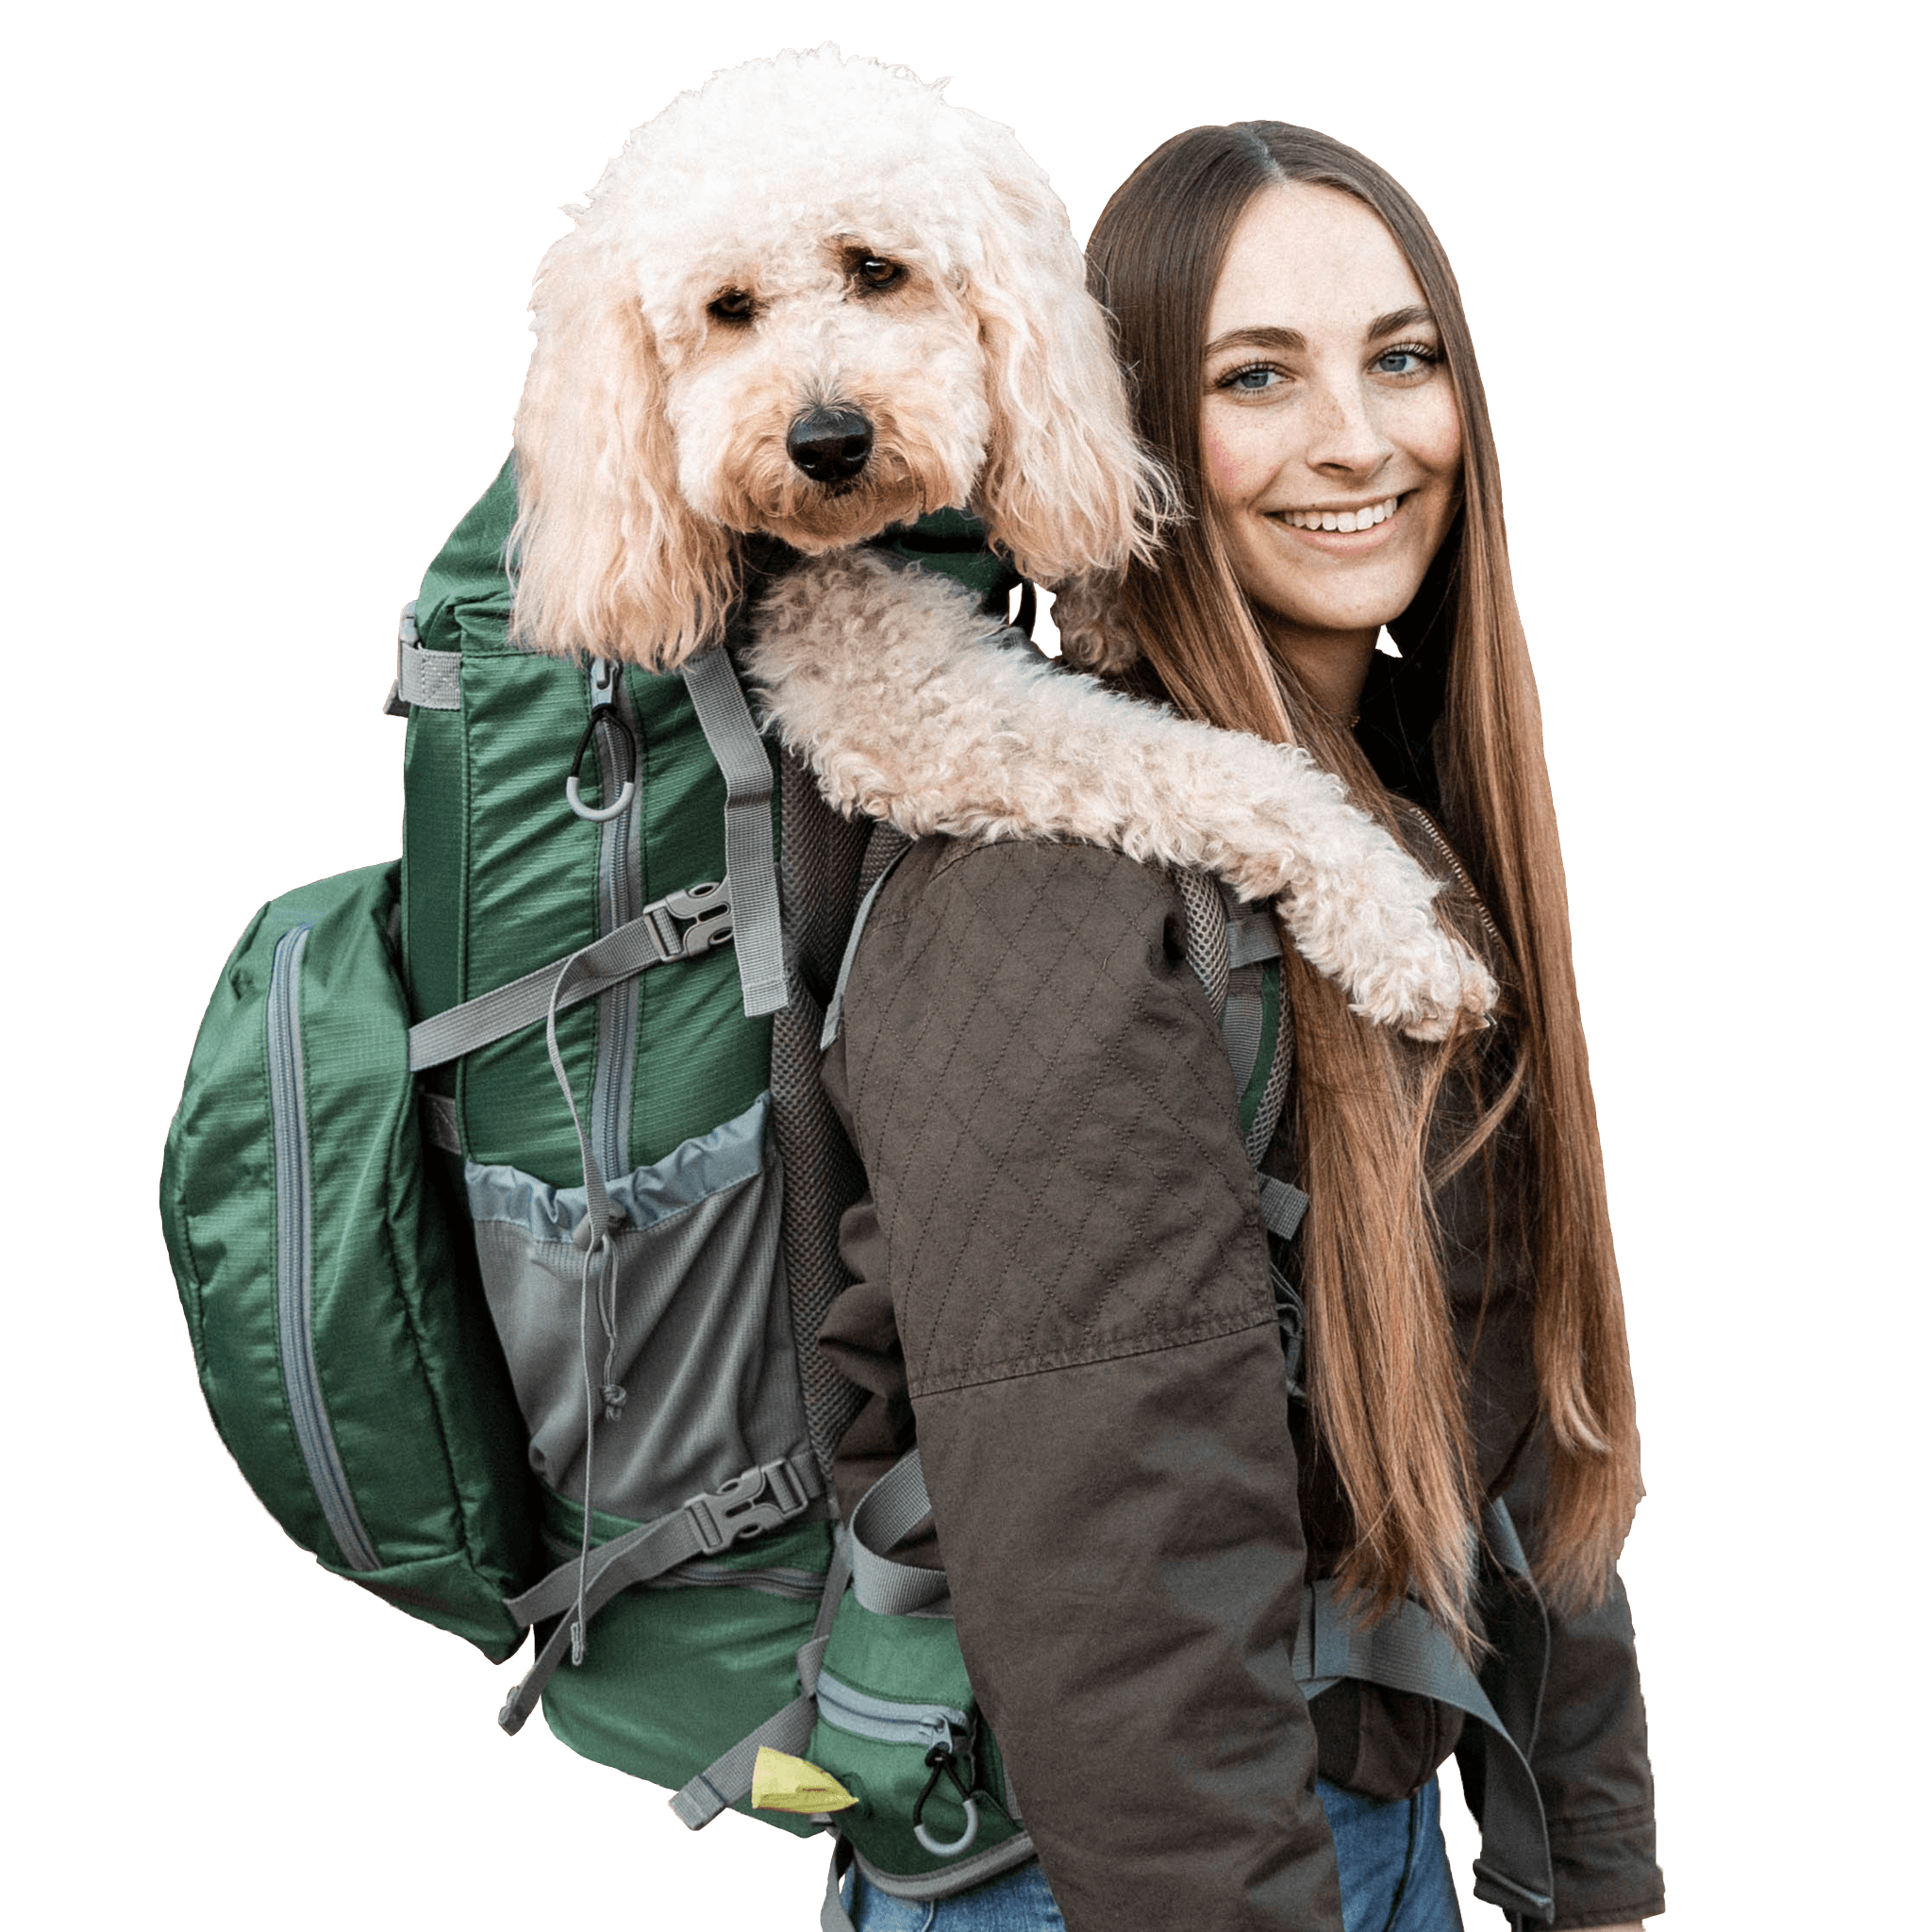 Do Dogs Like Carrying Backpacks